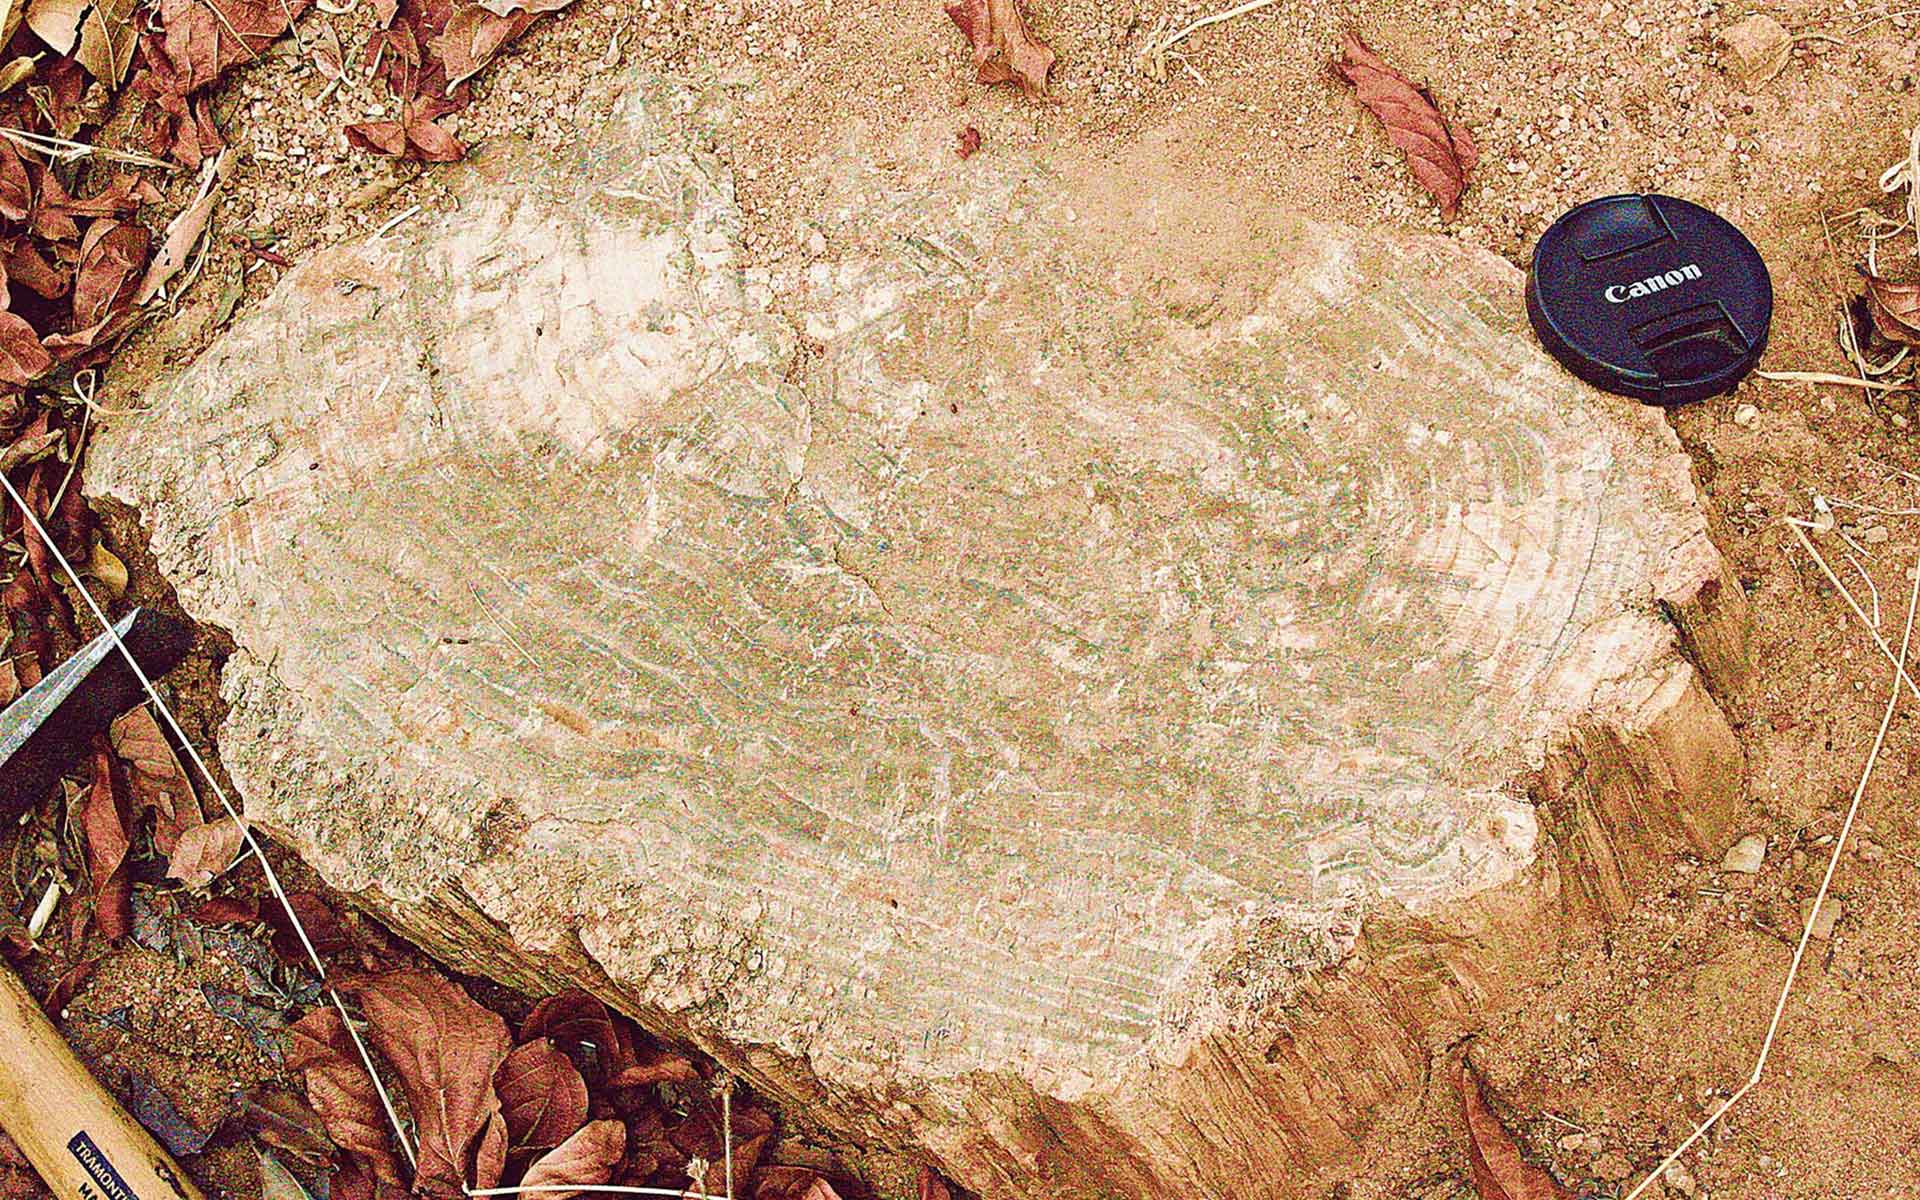 Fossil woods from the Nhambando site